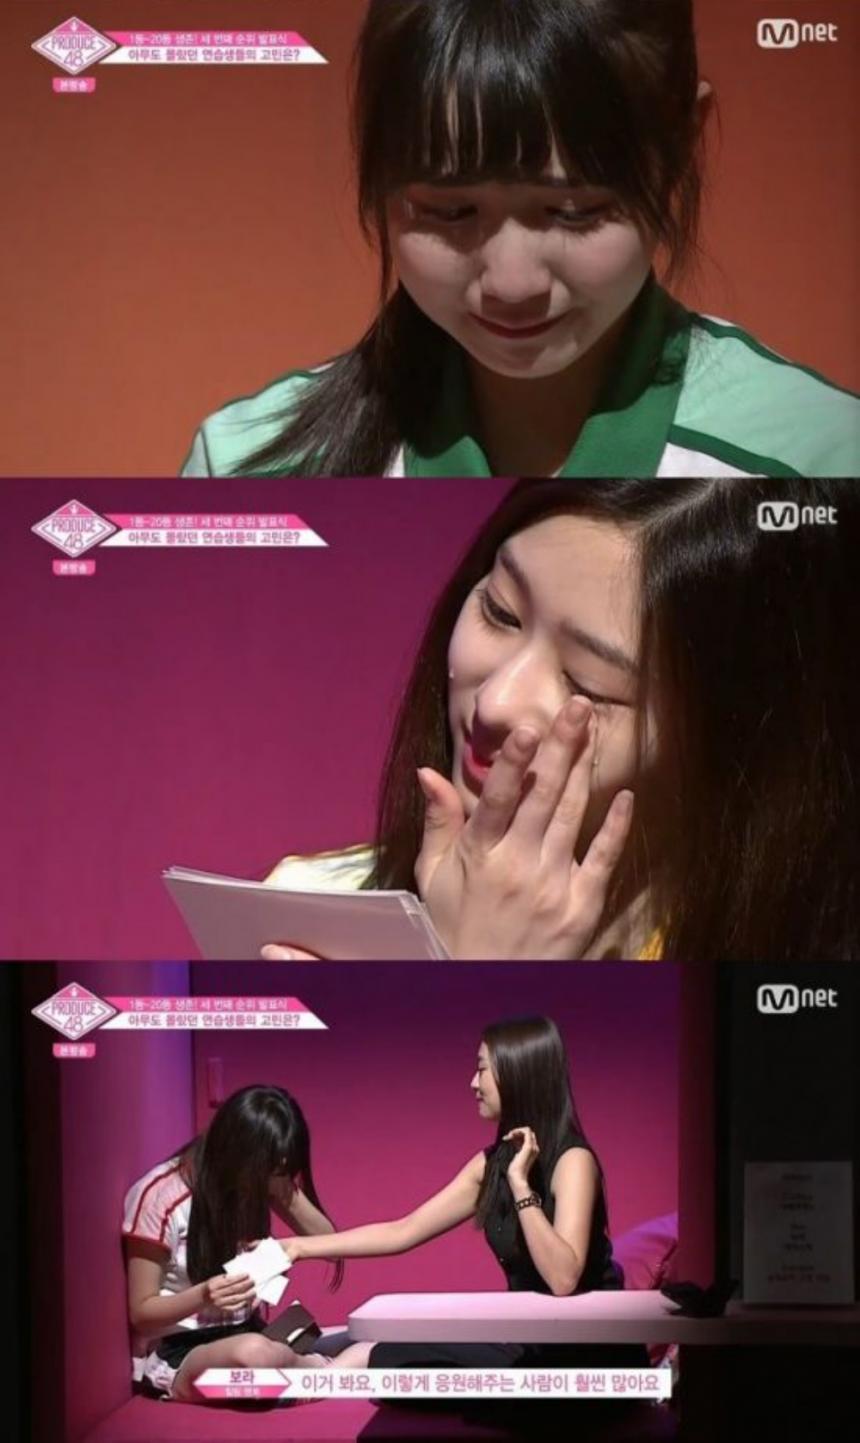 Mnet ‘프로듀스48’ 방송 캡처